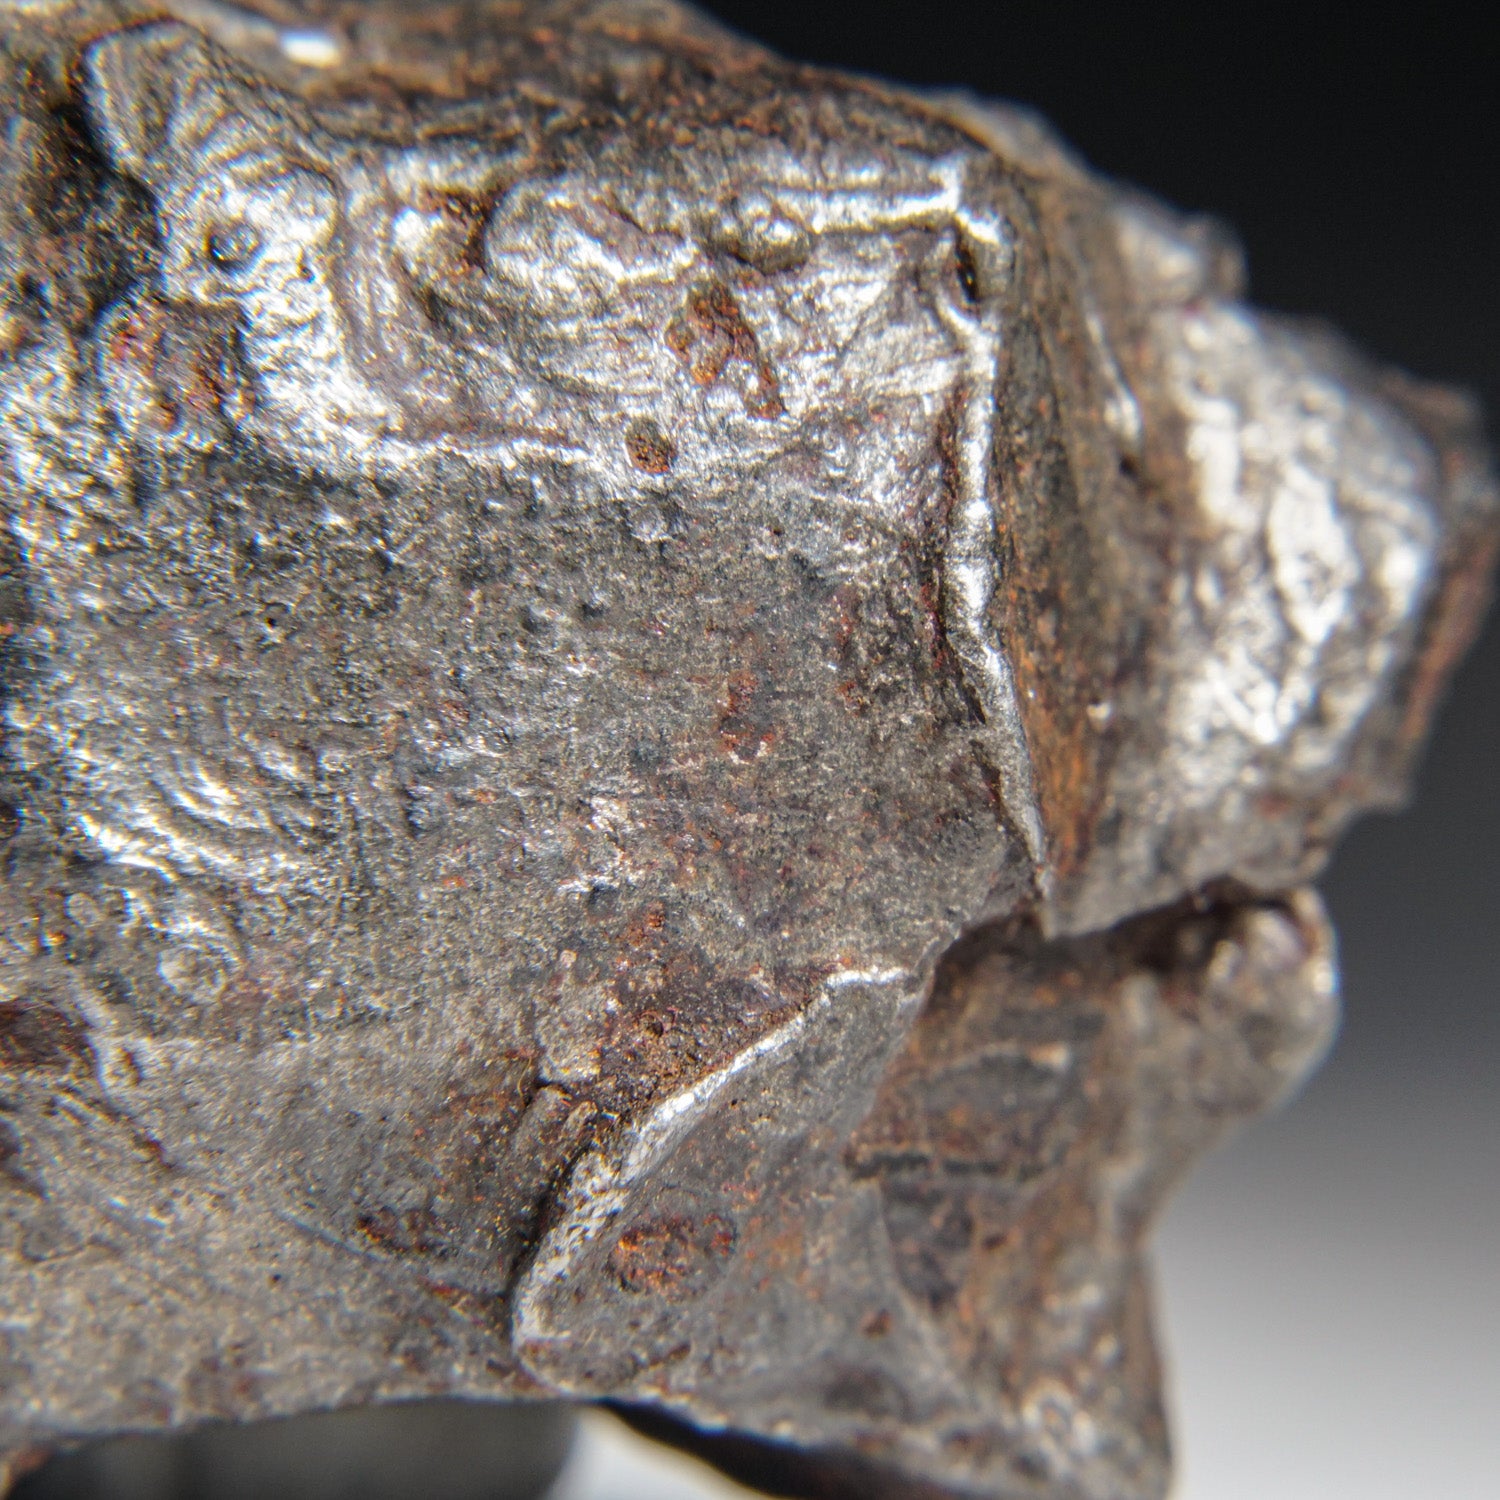 Genuine Natural Sikhote-Alin Meteorite from Russia (56.7 grams)